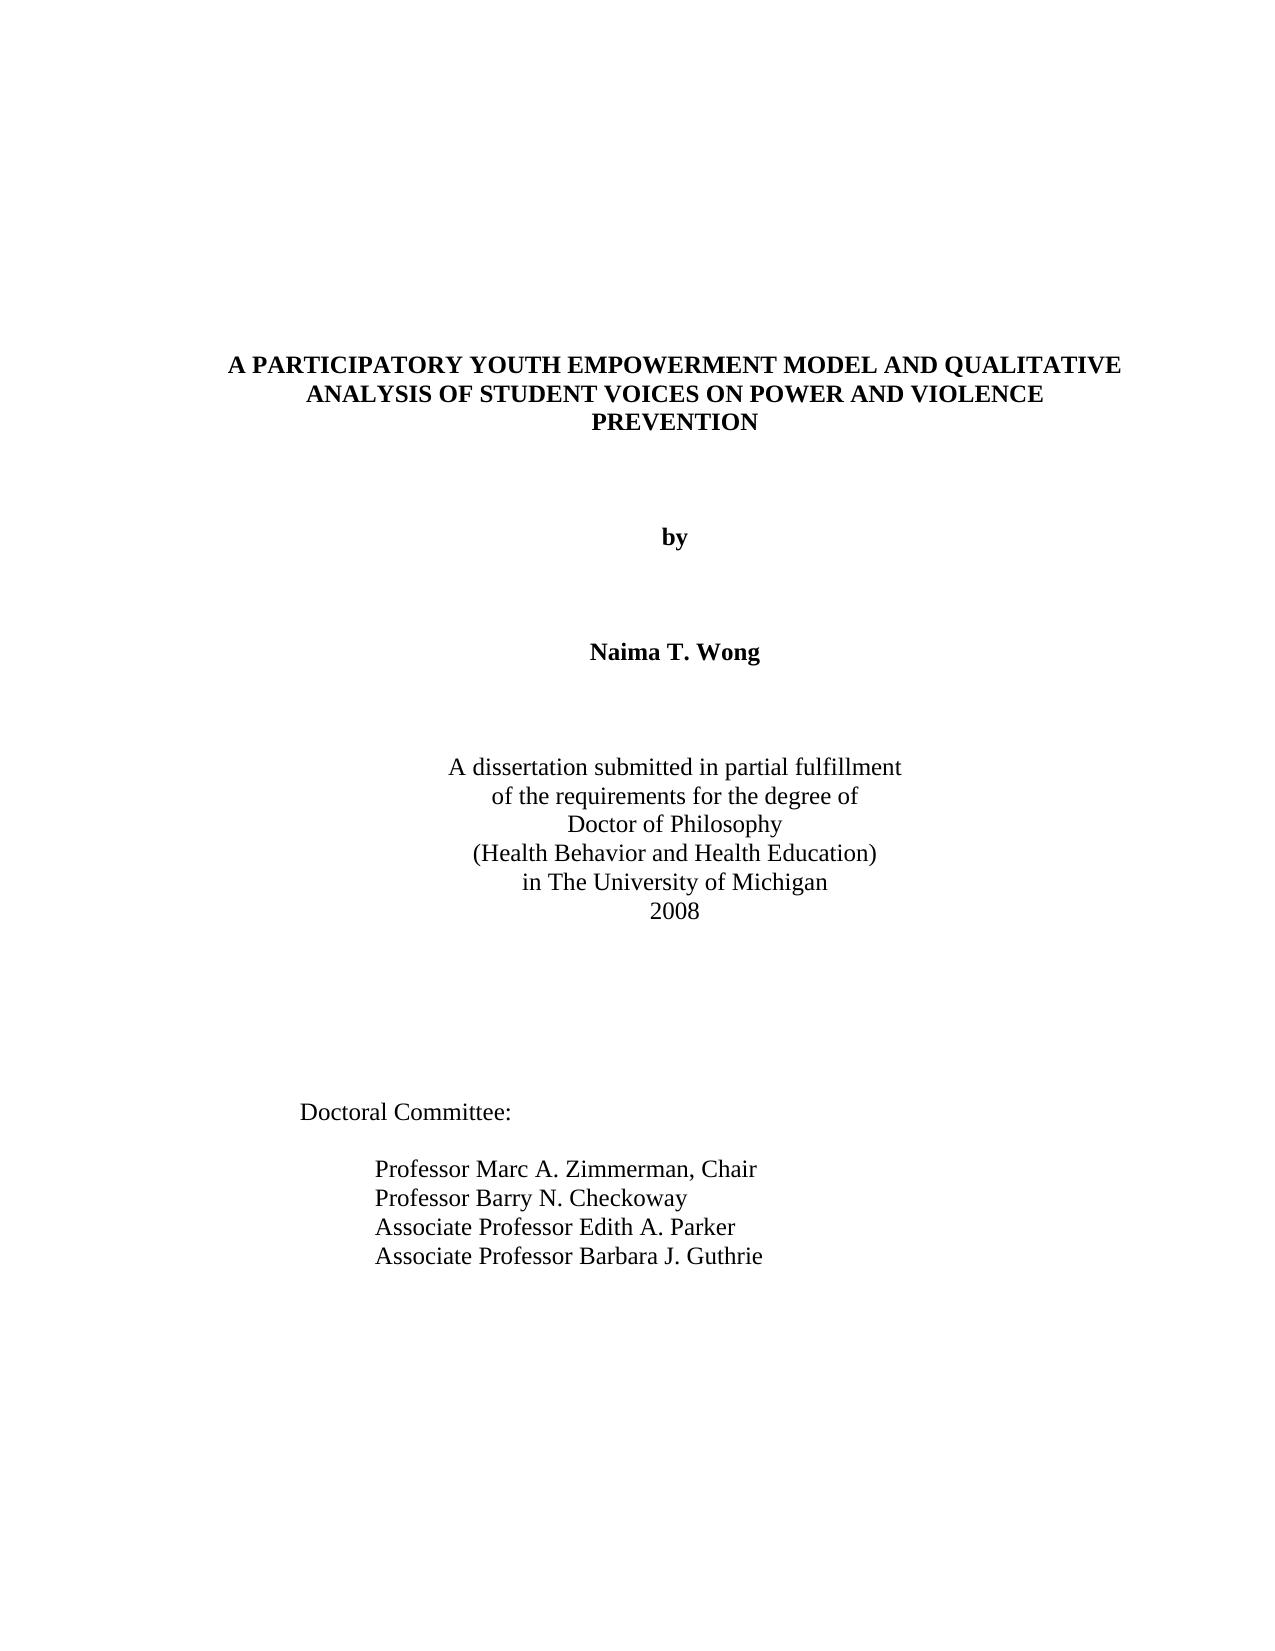 Microsoft Word - Naima T. Wong Dissertation.doc